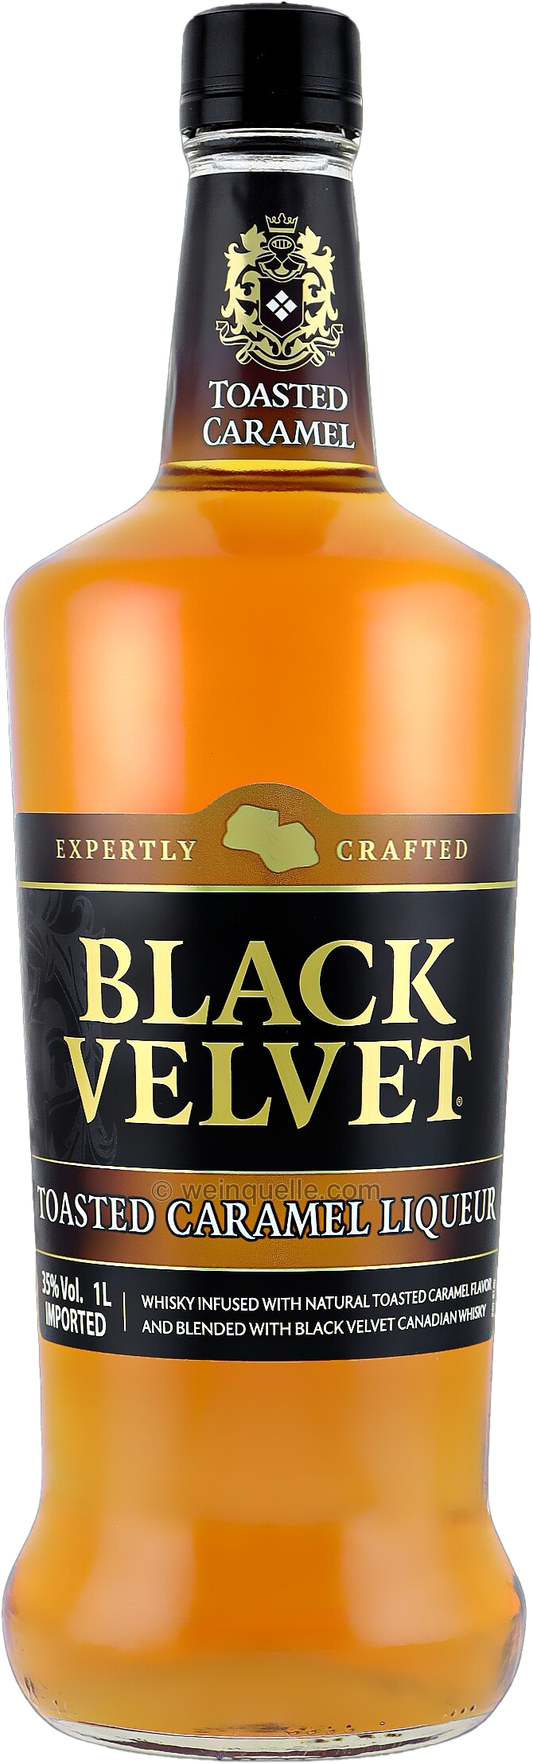 Black Velvet Toasted Caramel Canadian Whisky 1L